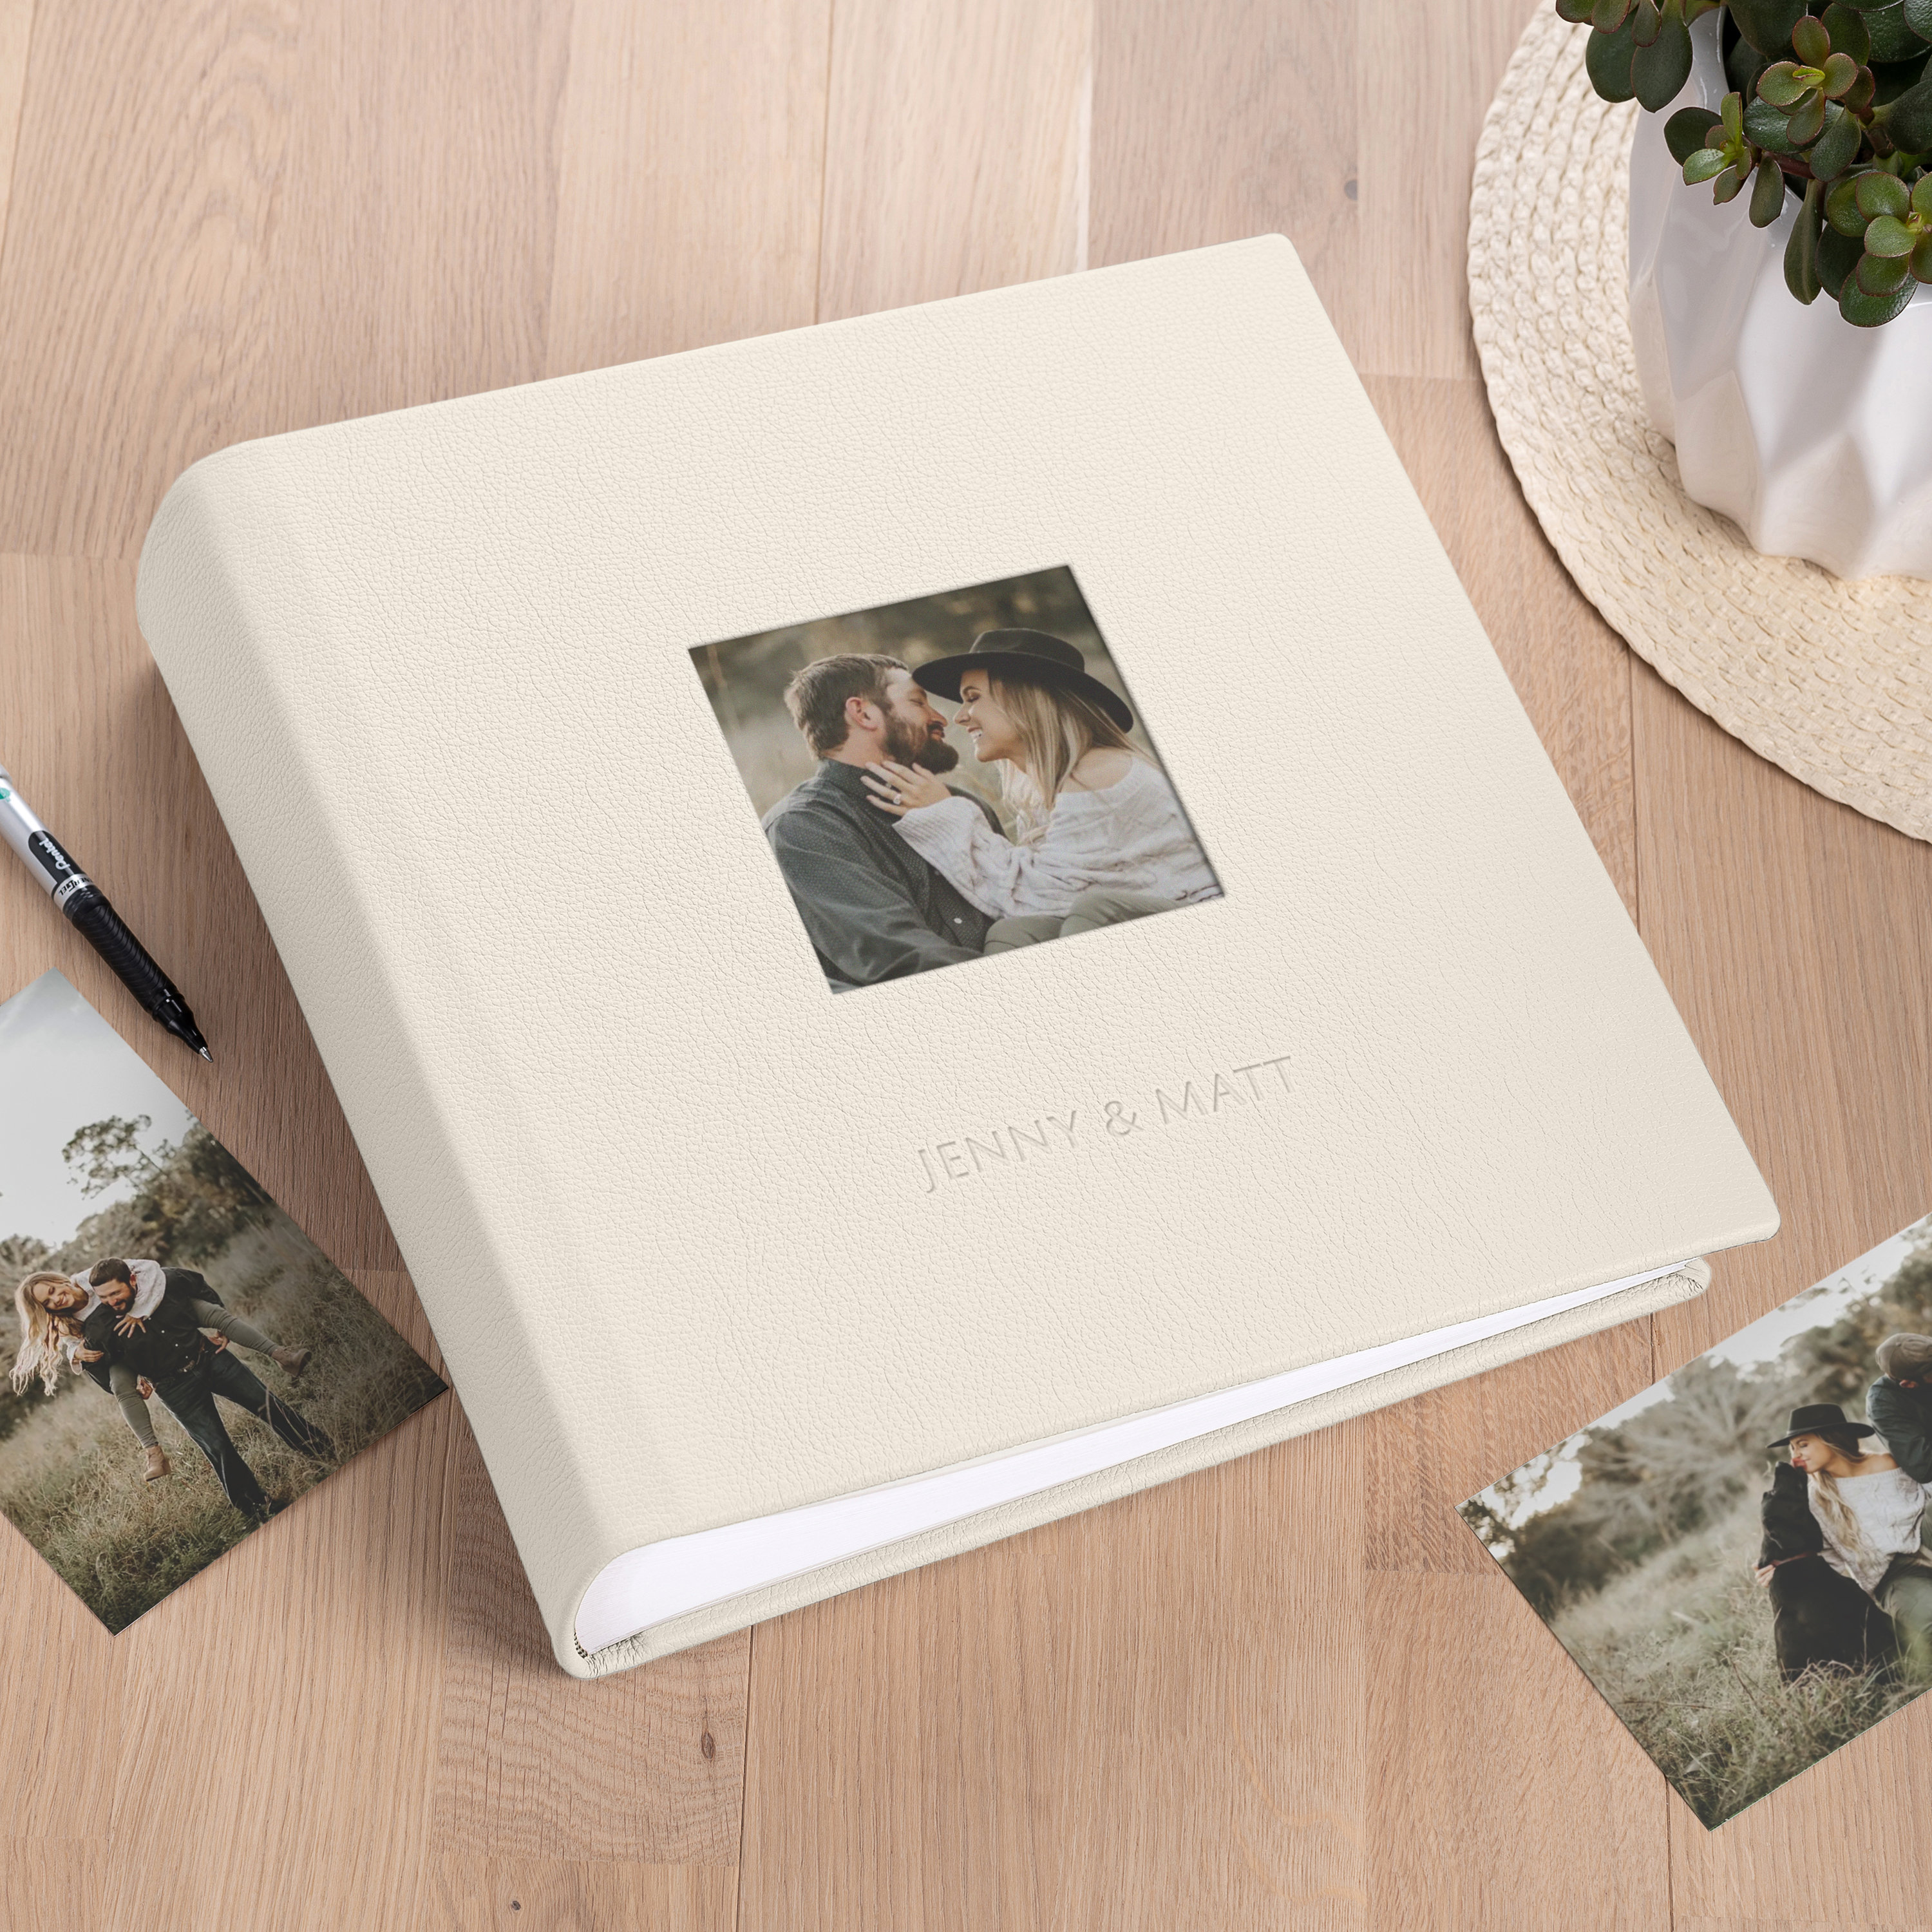 Handmade Scrapbook Memory Book Album AWedding Holiday Story can personalise  8x8